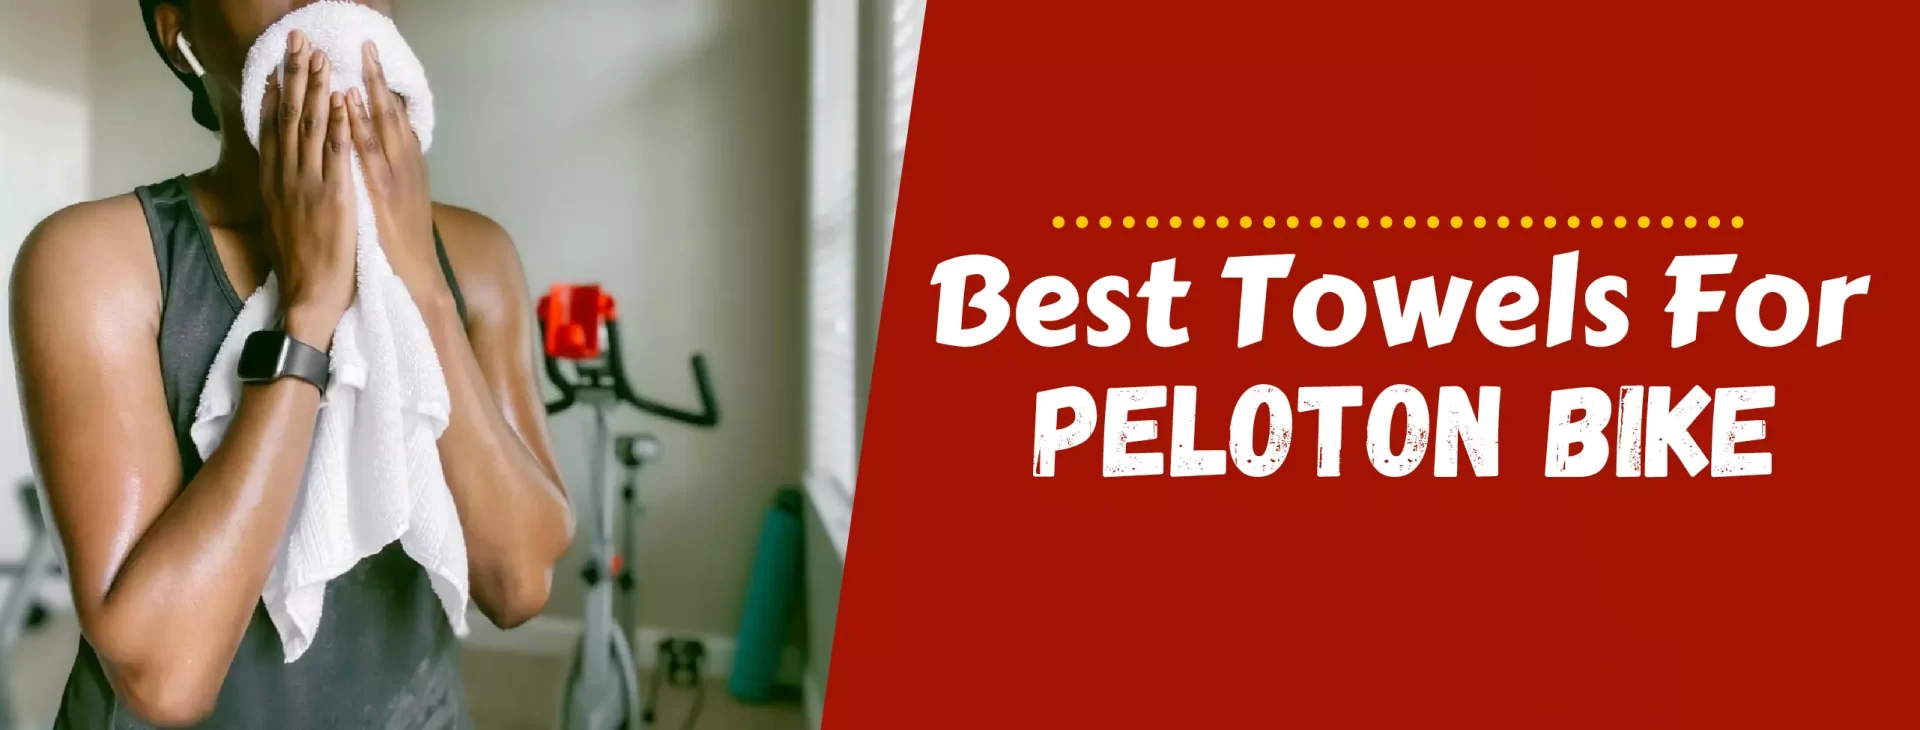 Best Towels For Peloton Bike